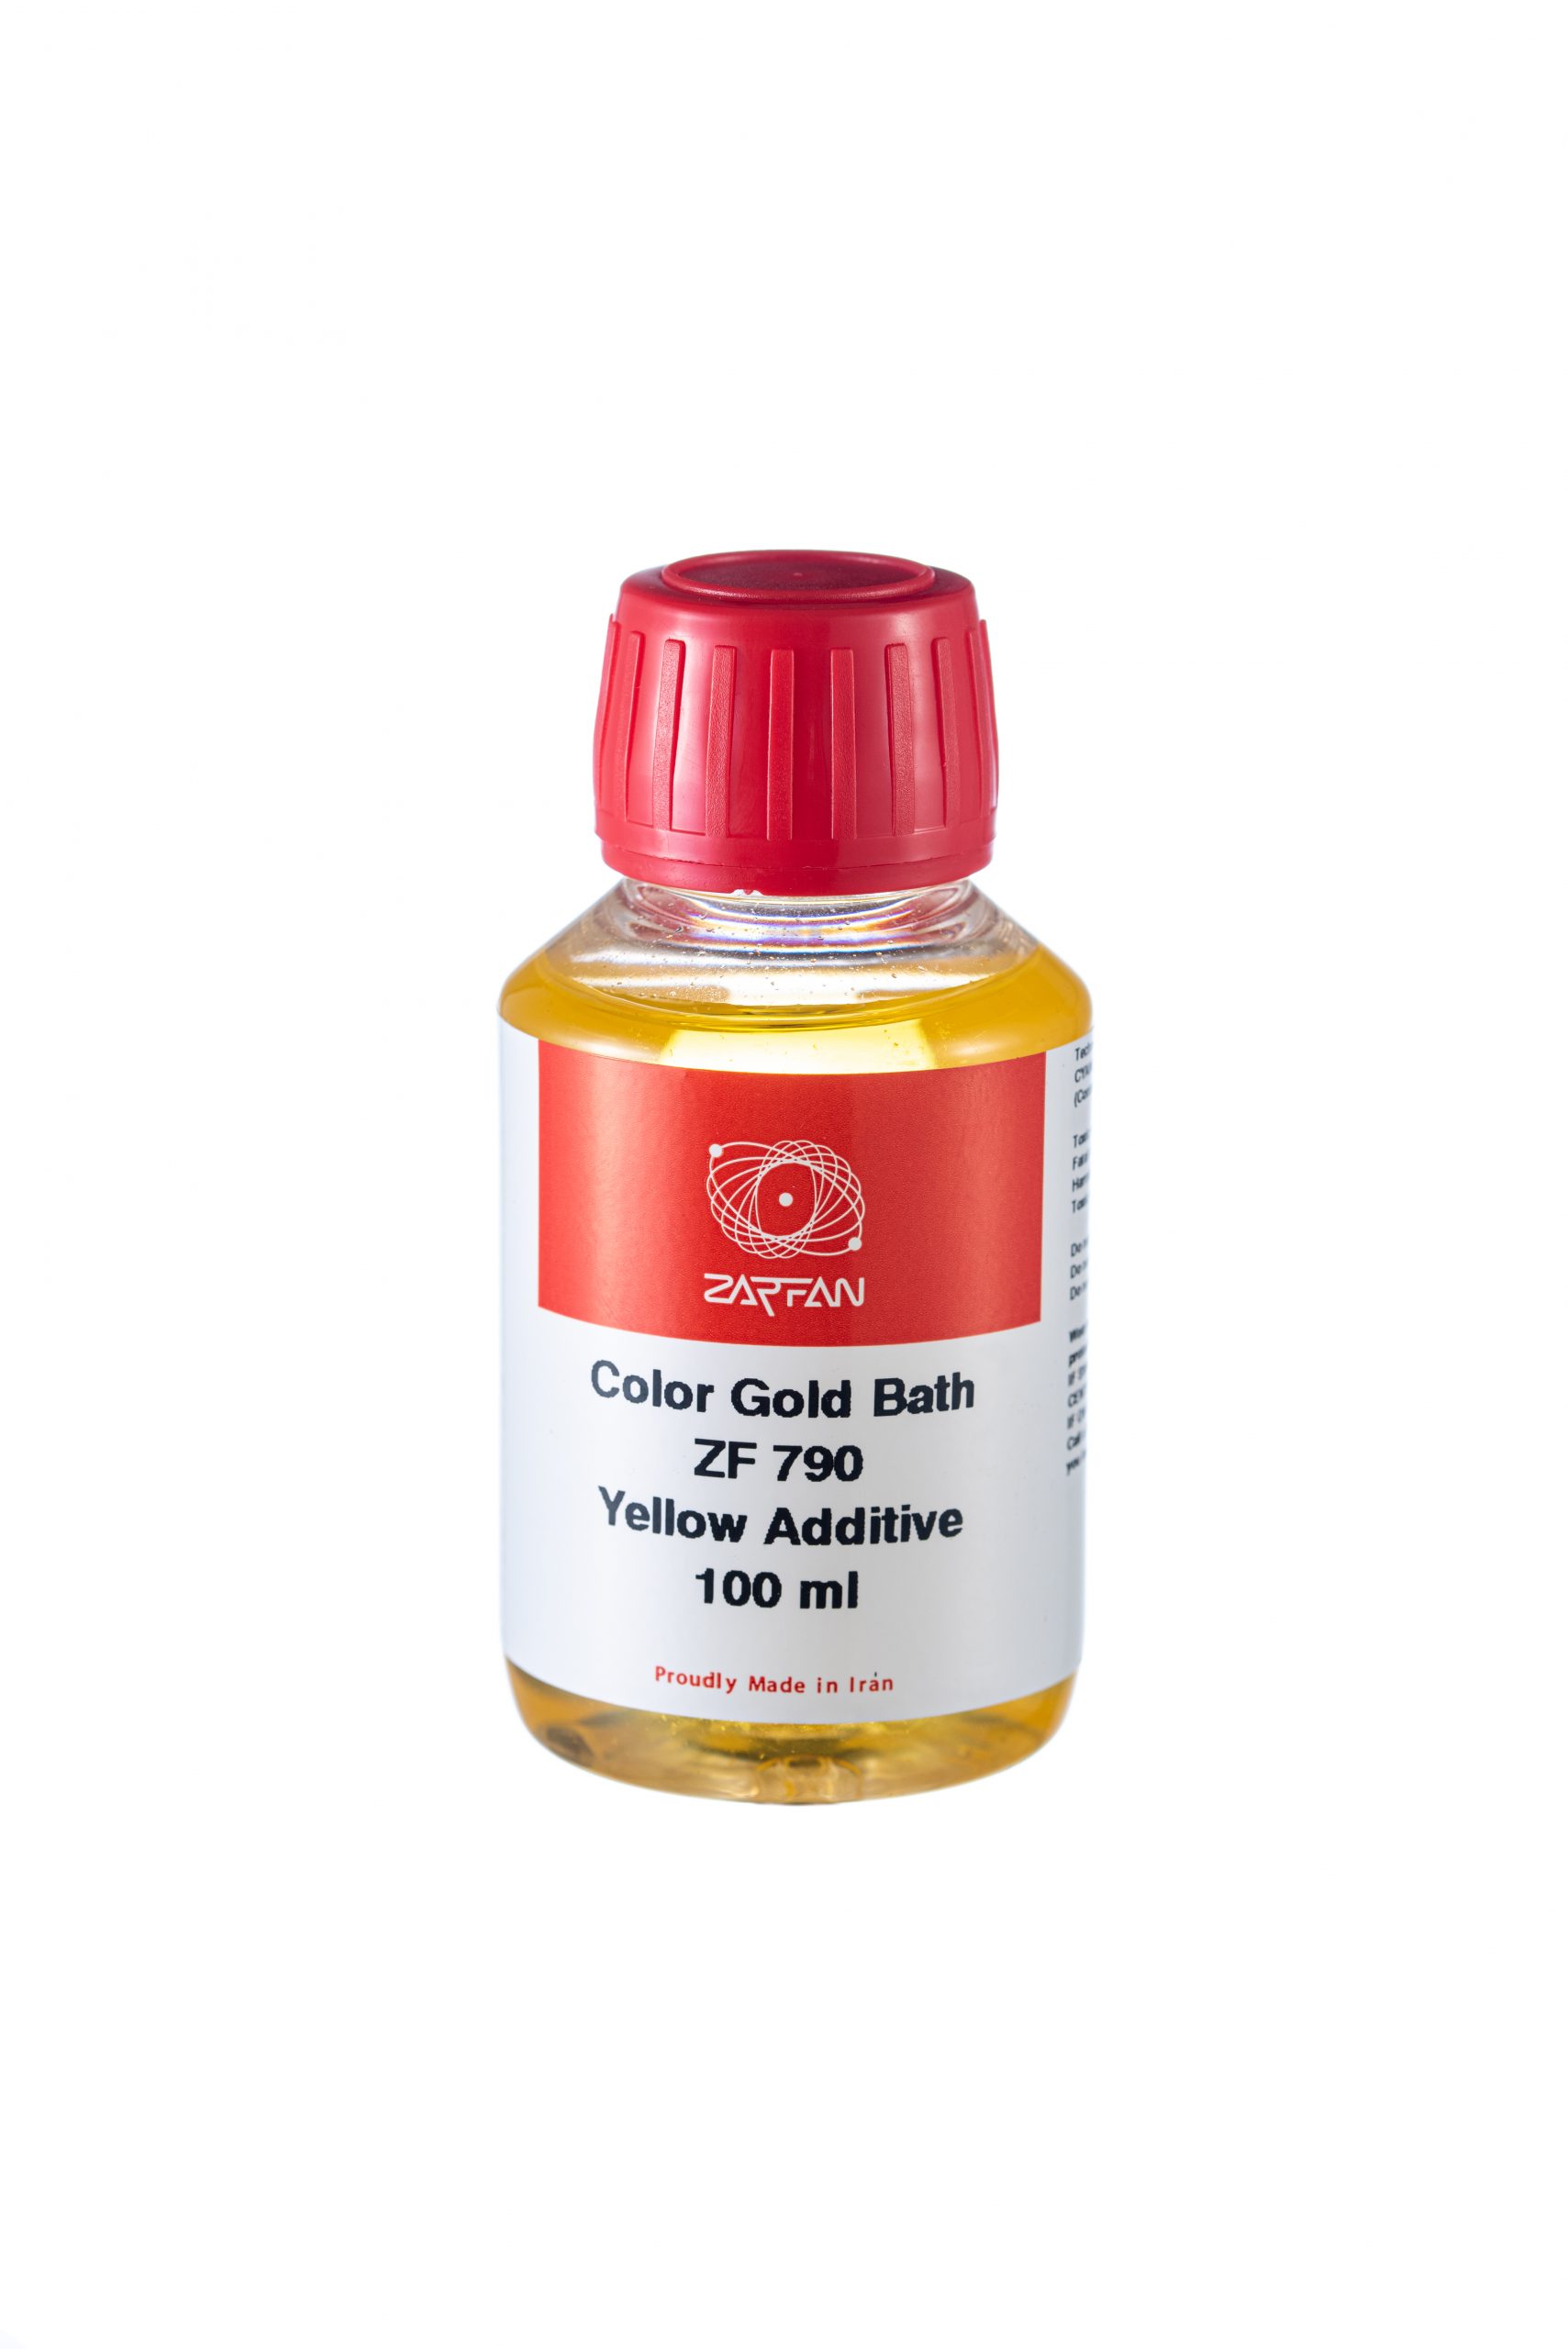 Color Gold Bath Additives